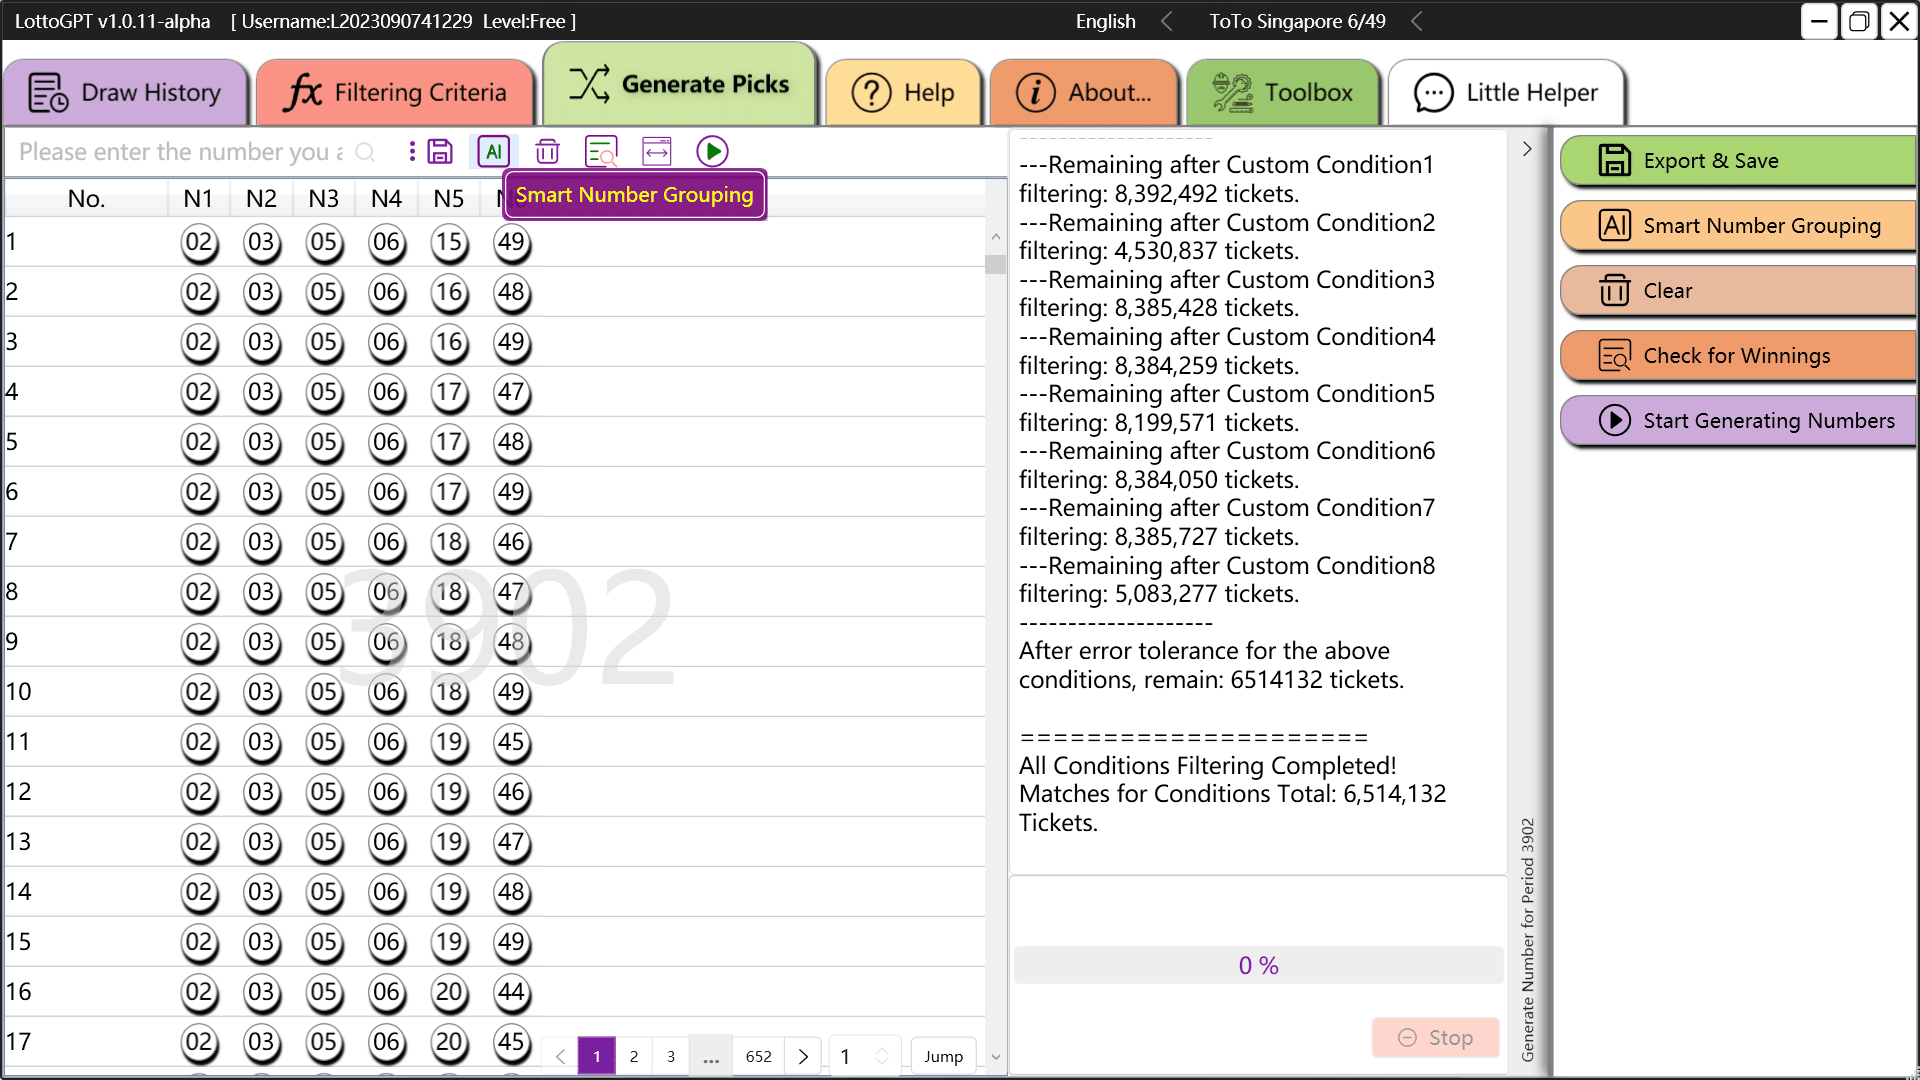 screenshot of lottoGPT interface 10